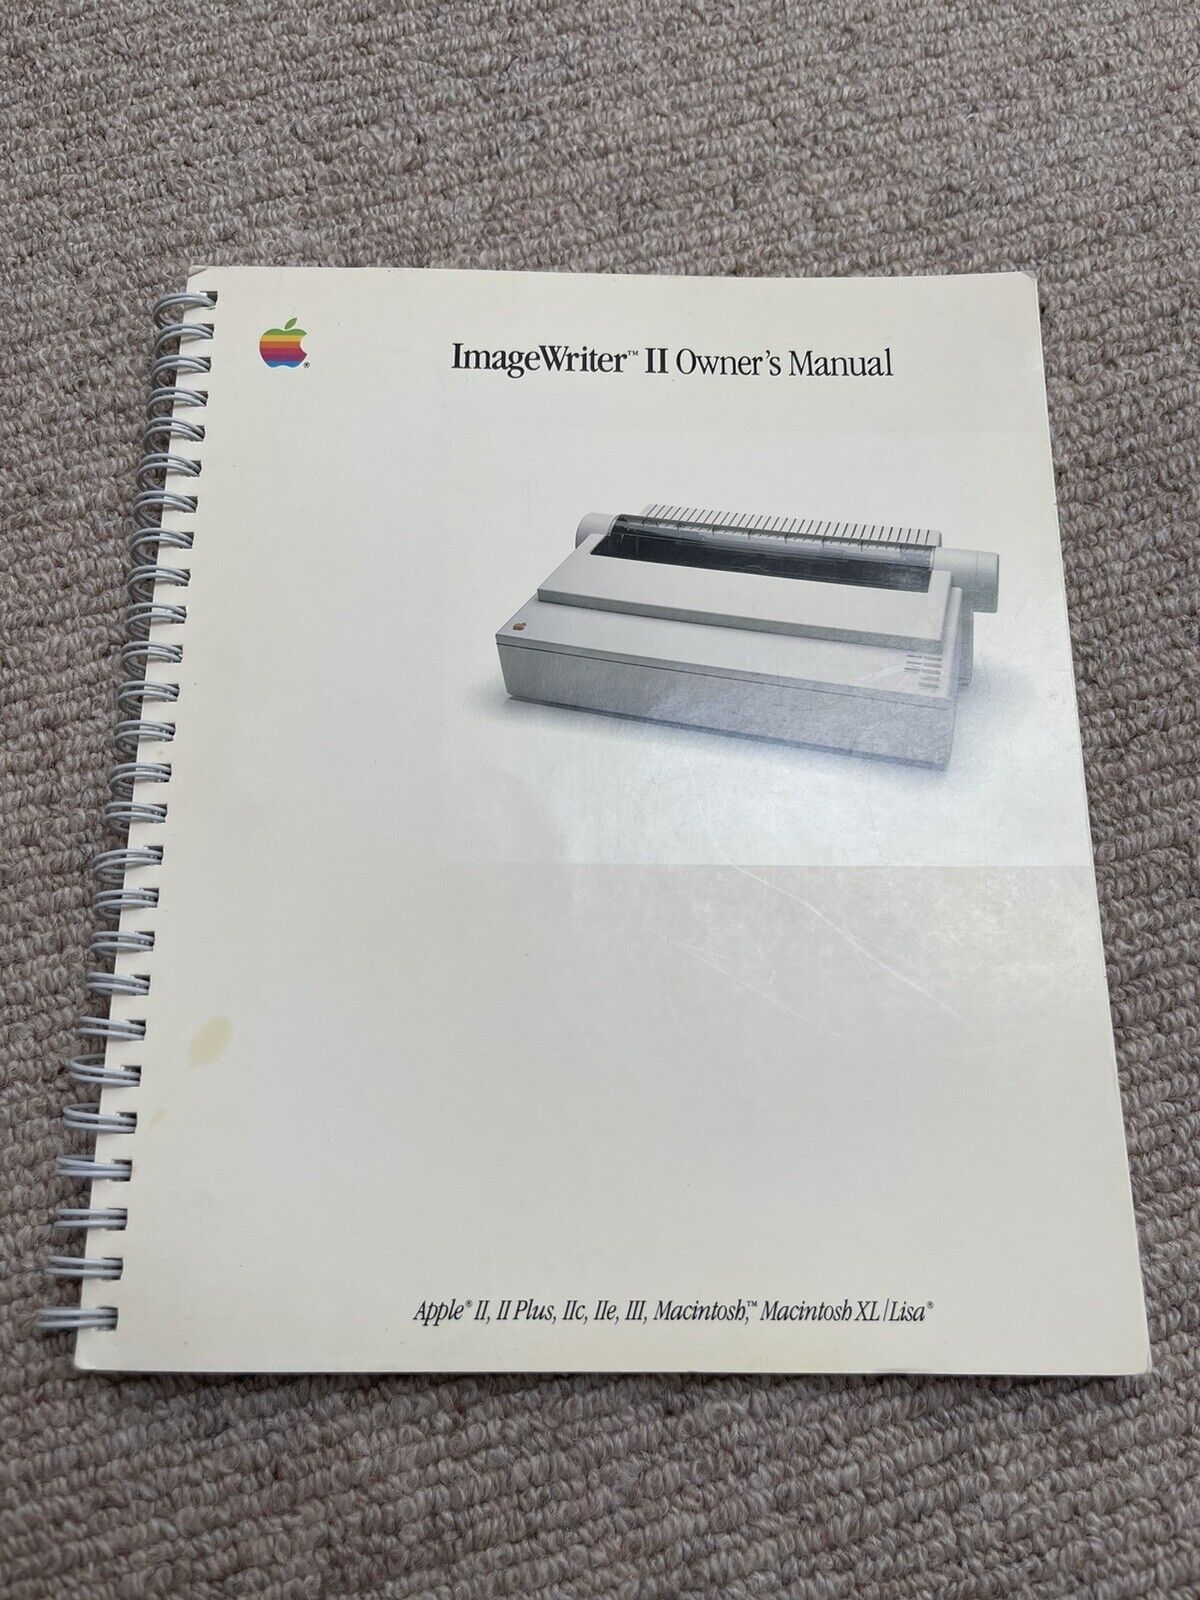 Vintage Apple ImageWriter II Owner's Manual for Apple II/IIPlus/IIc/IIe/III/Mac